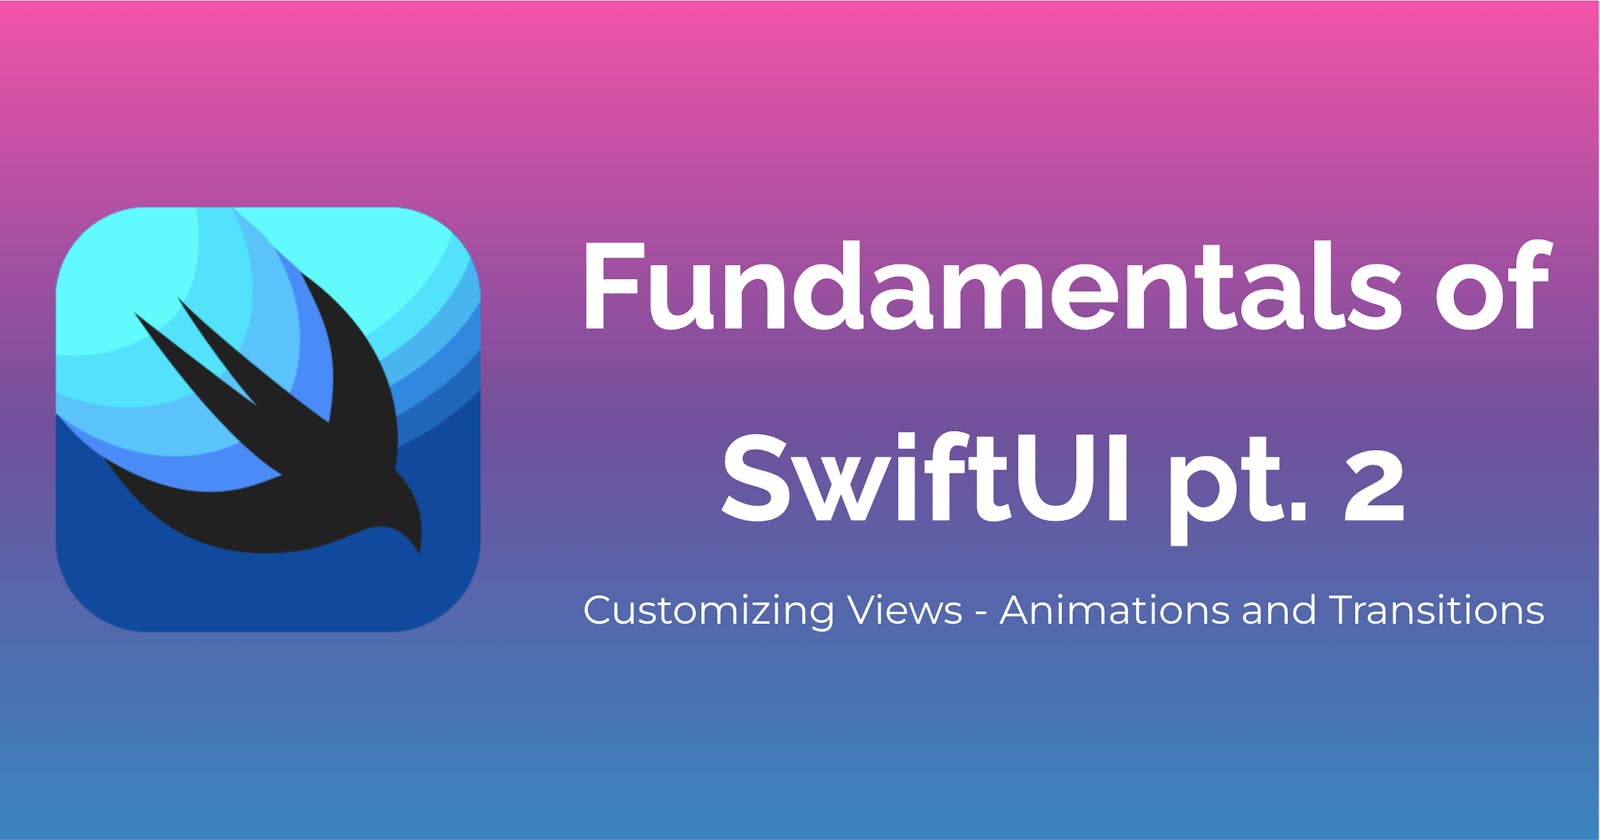 Understanding the fundamentals of SwiftUI for iOS development pt.2